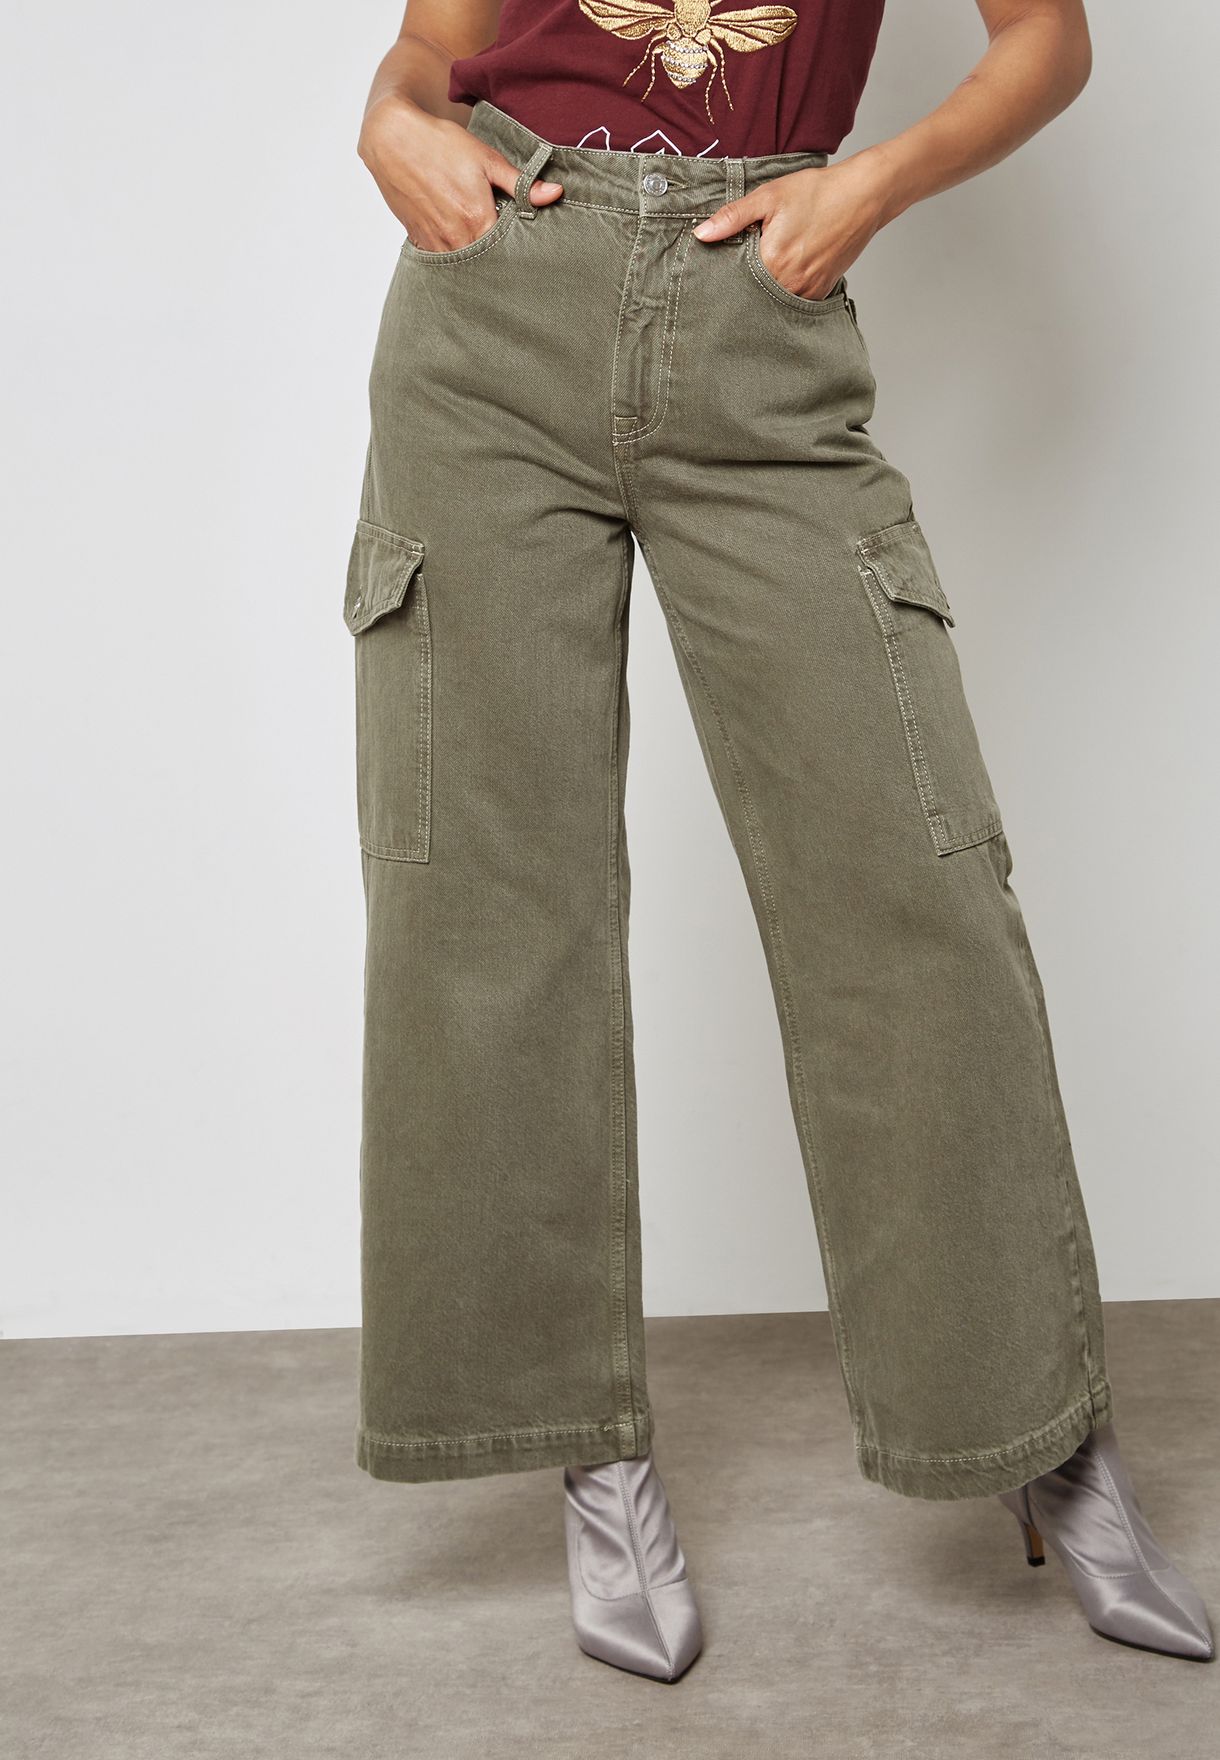 topshop green cargo pants